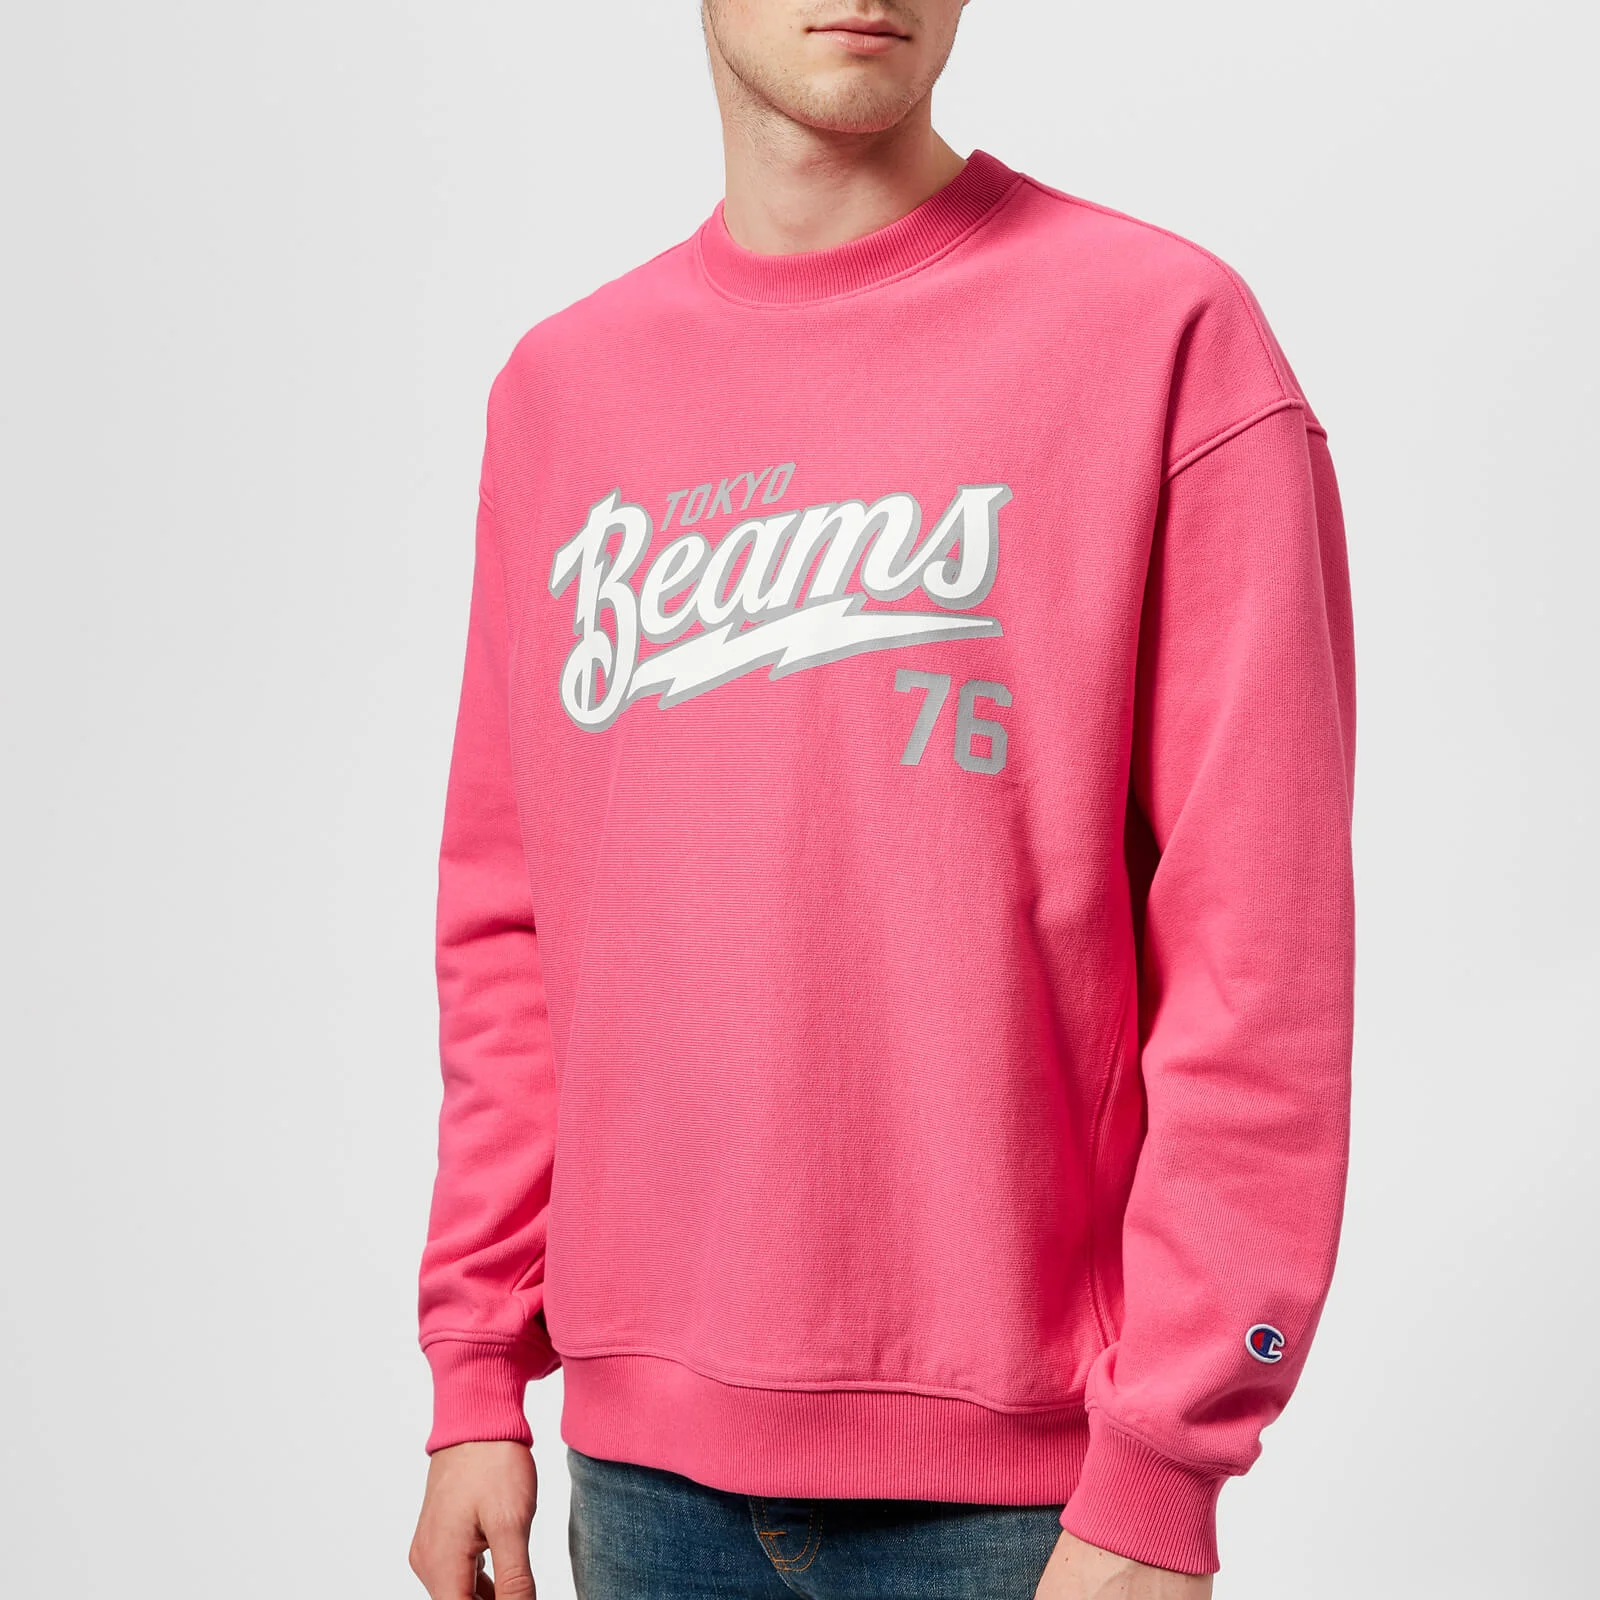 Champion X Beams Men's Crew Neck Sweatshirt - Pink Image 1